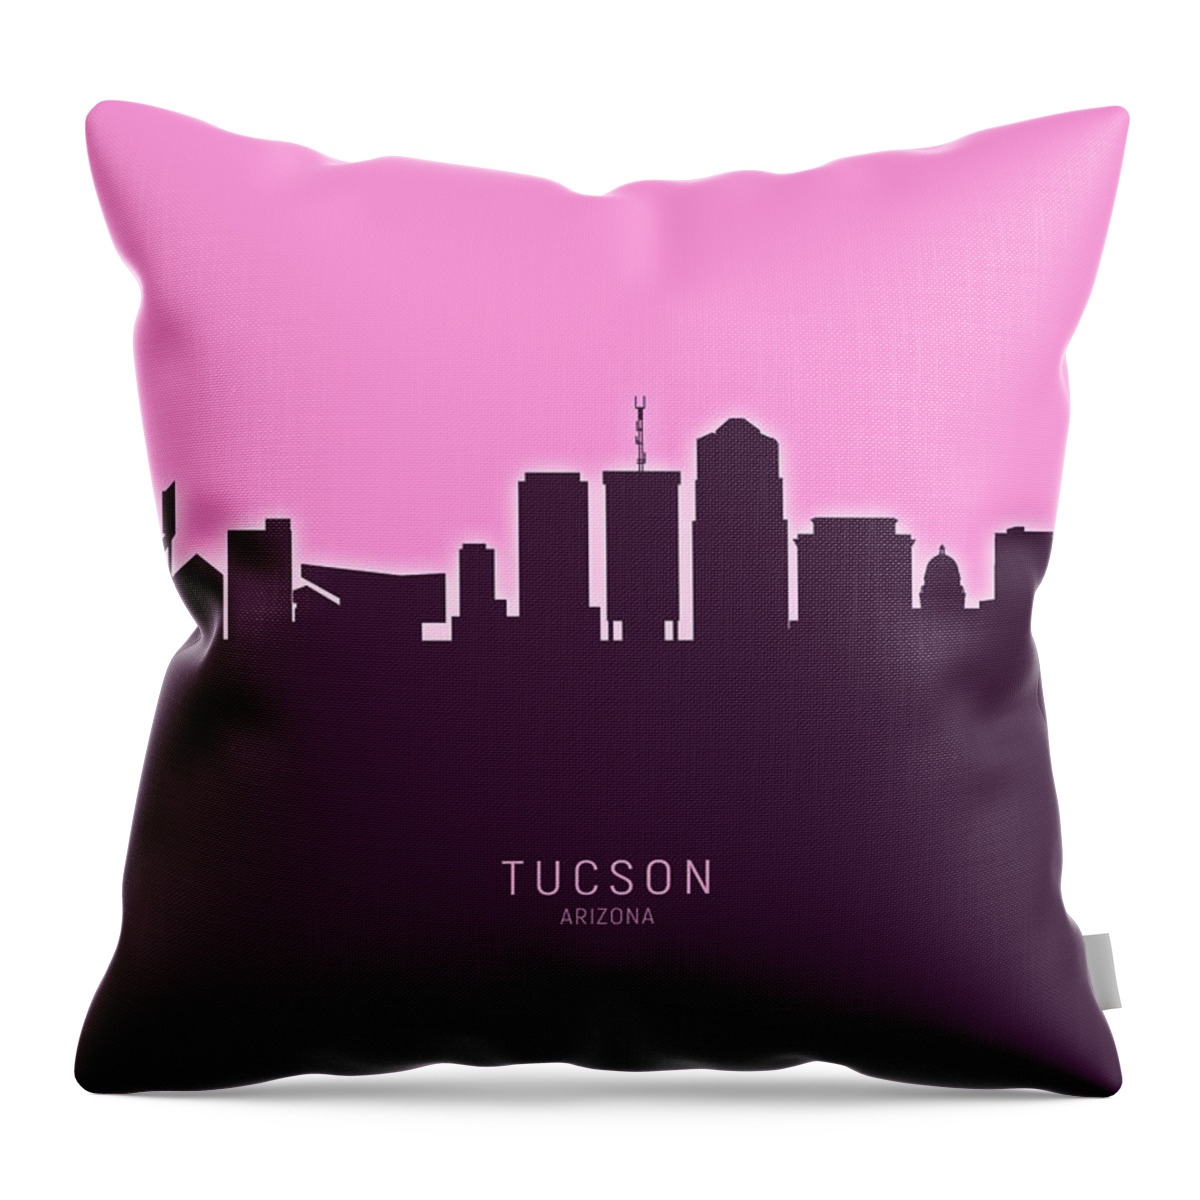 Tucson Throw Pillow featuring the digital art Tucson Arizona Skyline #25 by Michael Tompsett